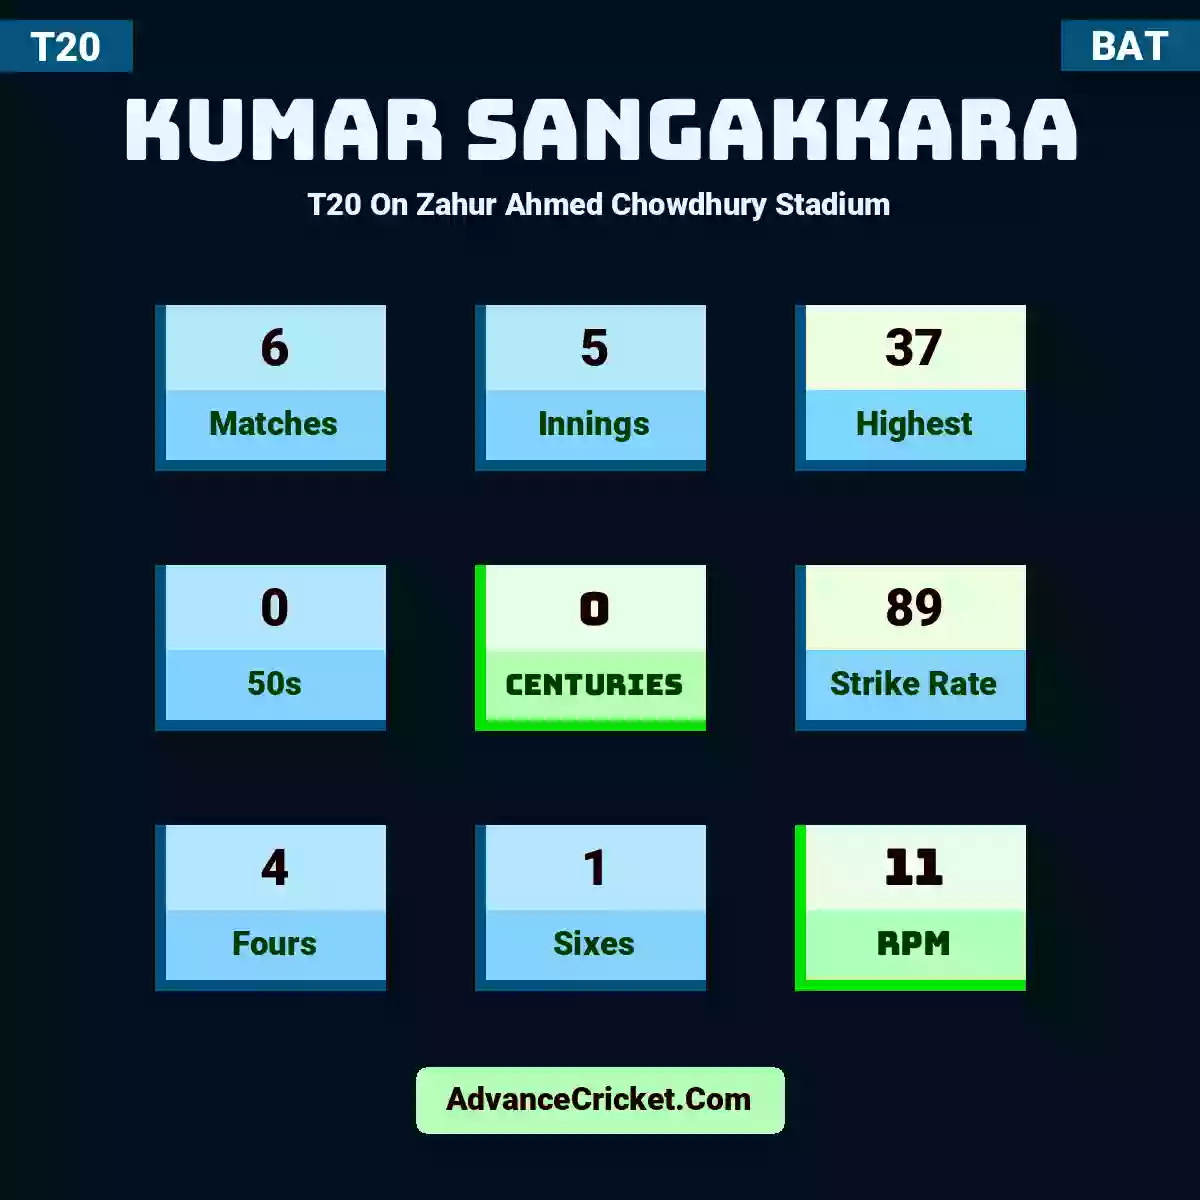 Kumar Sangakkara T20  On Zahur Ahmed Chowdhury Stadium, Kumar Sangakkara played 6 matches, scored 37 runs as highest, 0 half-centuries, and 0 centuries, with a strike rate of 89. K.Sangakkara hit 4 fours and 1 sixes, with an RPM of 11.